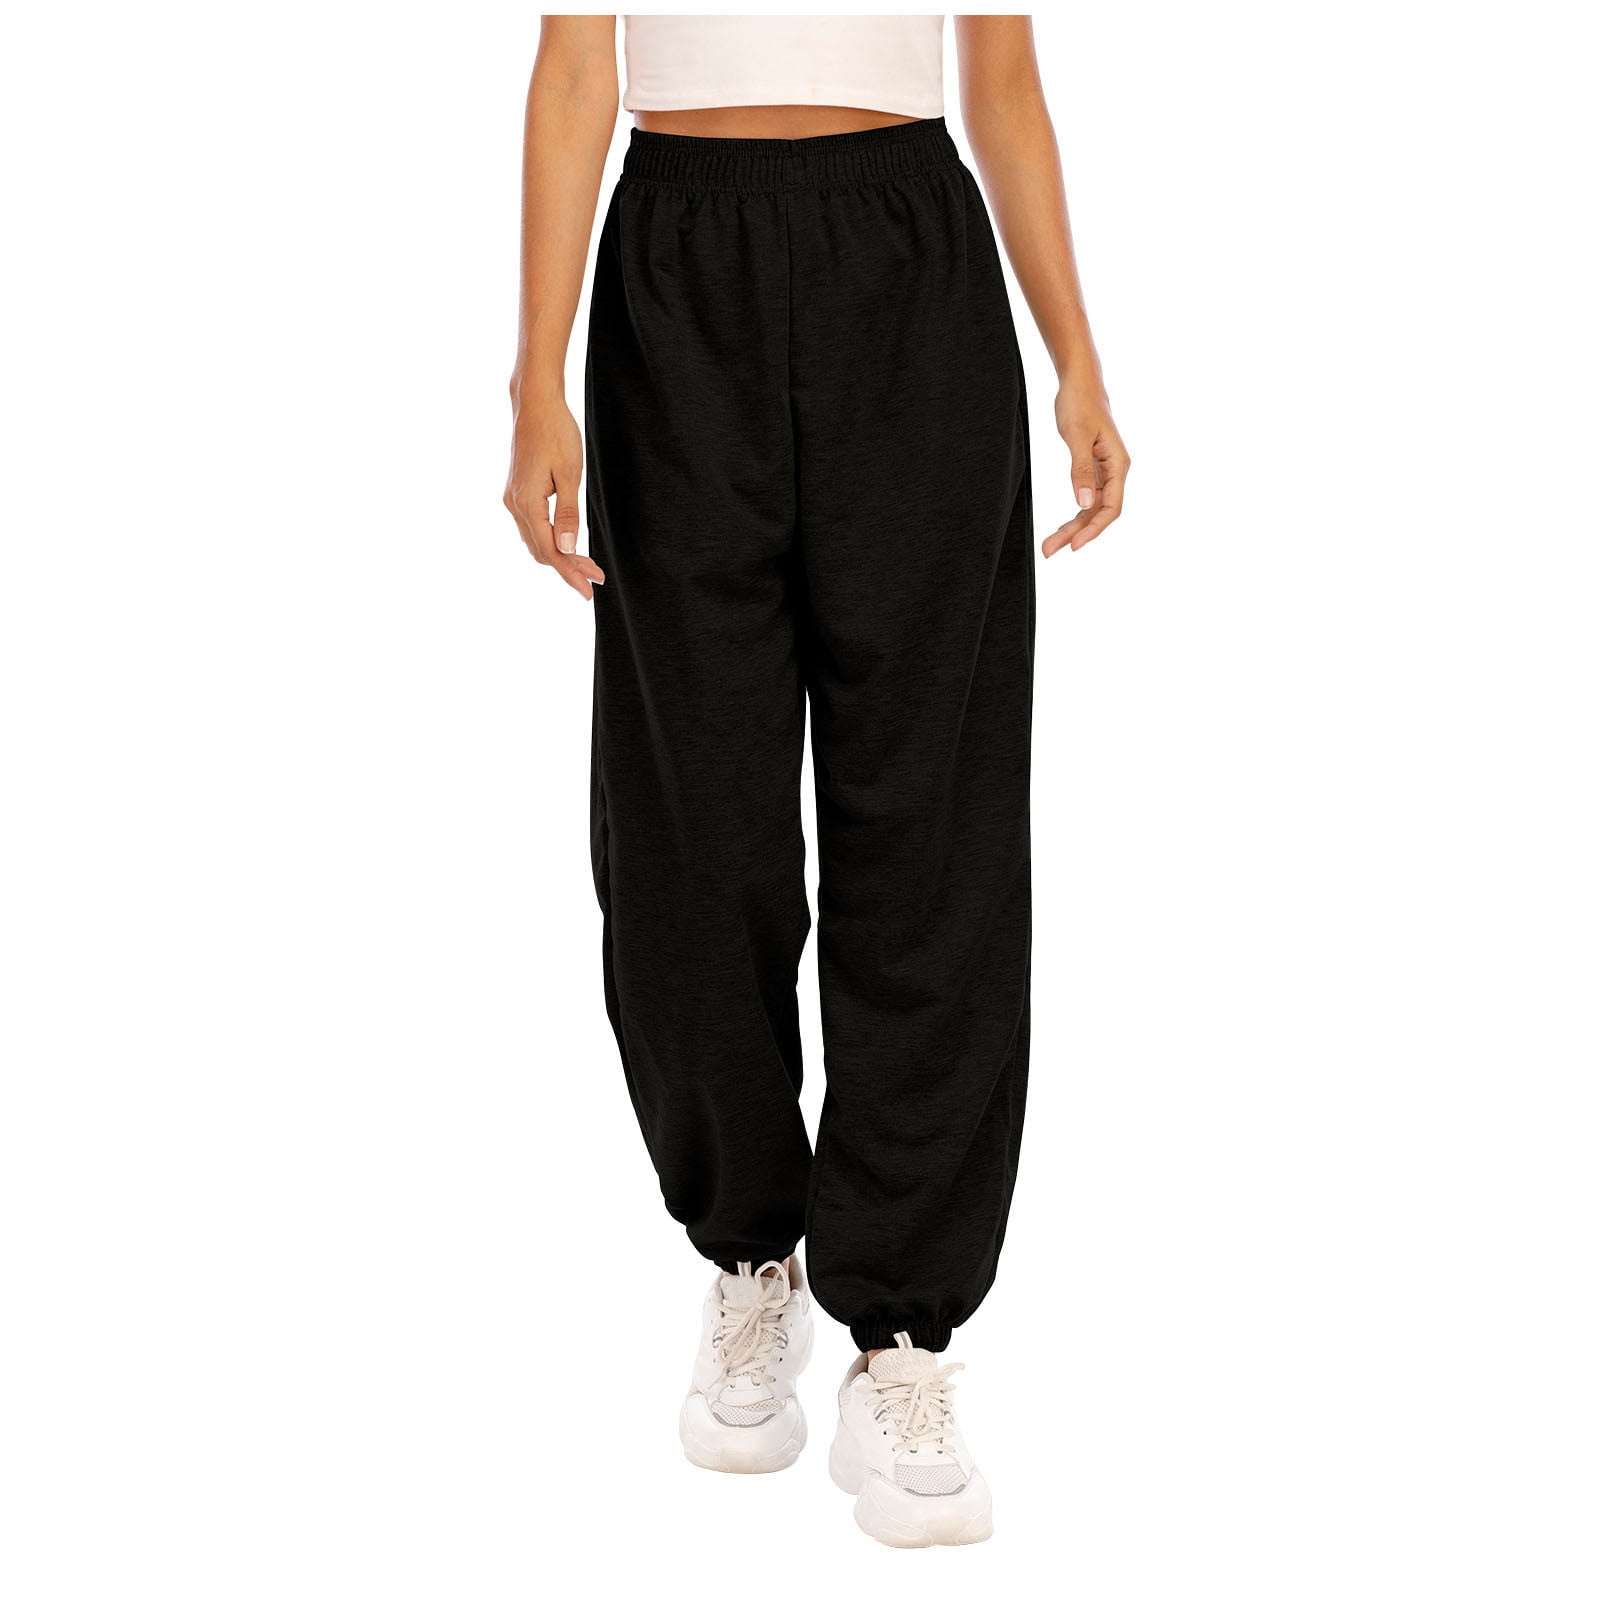 JWZUY Women's Elastic High Waist Sweatpants Workout Pocket Jogger Pants  without Pocket Solid Classic Fit Athletic Pants Black XXL 